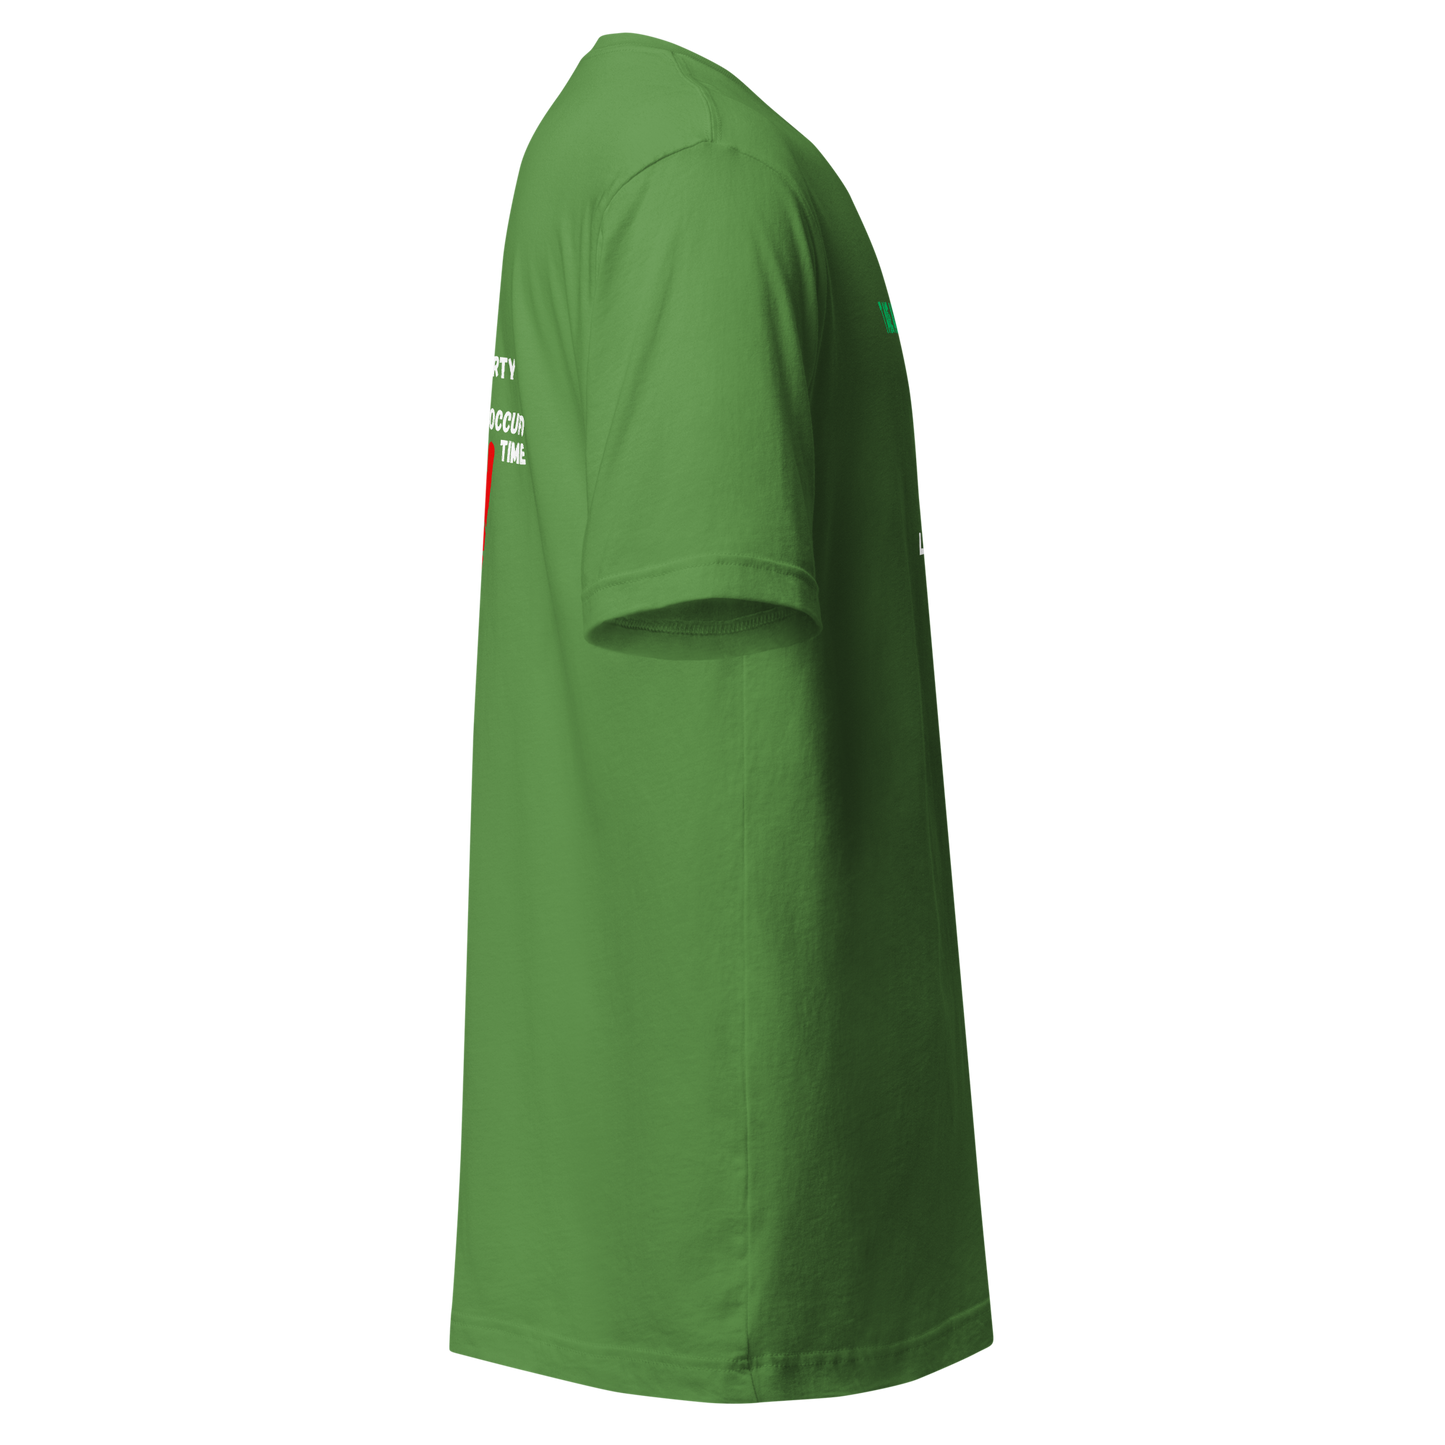 WOMEN's T-Shirt - ADVANTAGE BEFORE (Front/Back) - Green/White